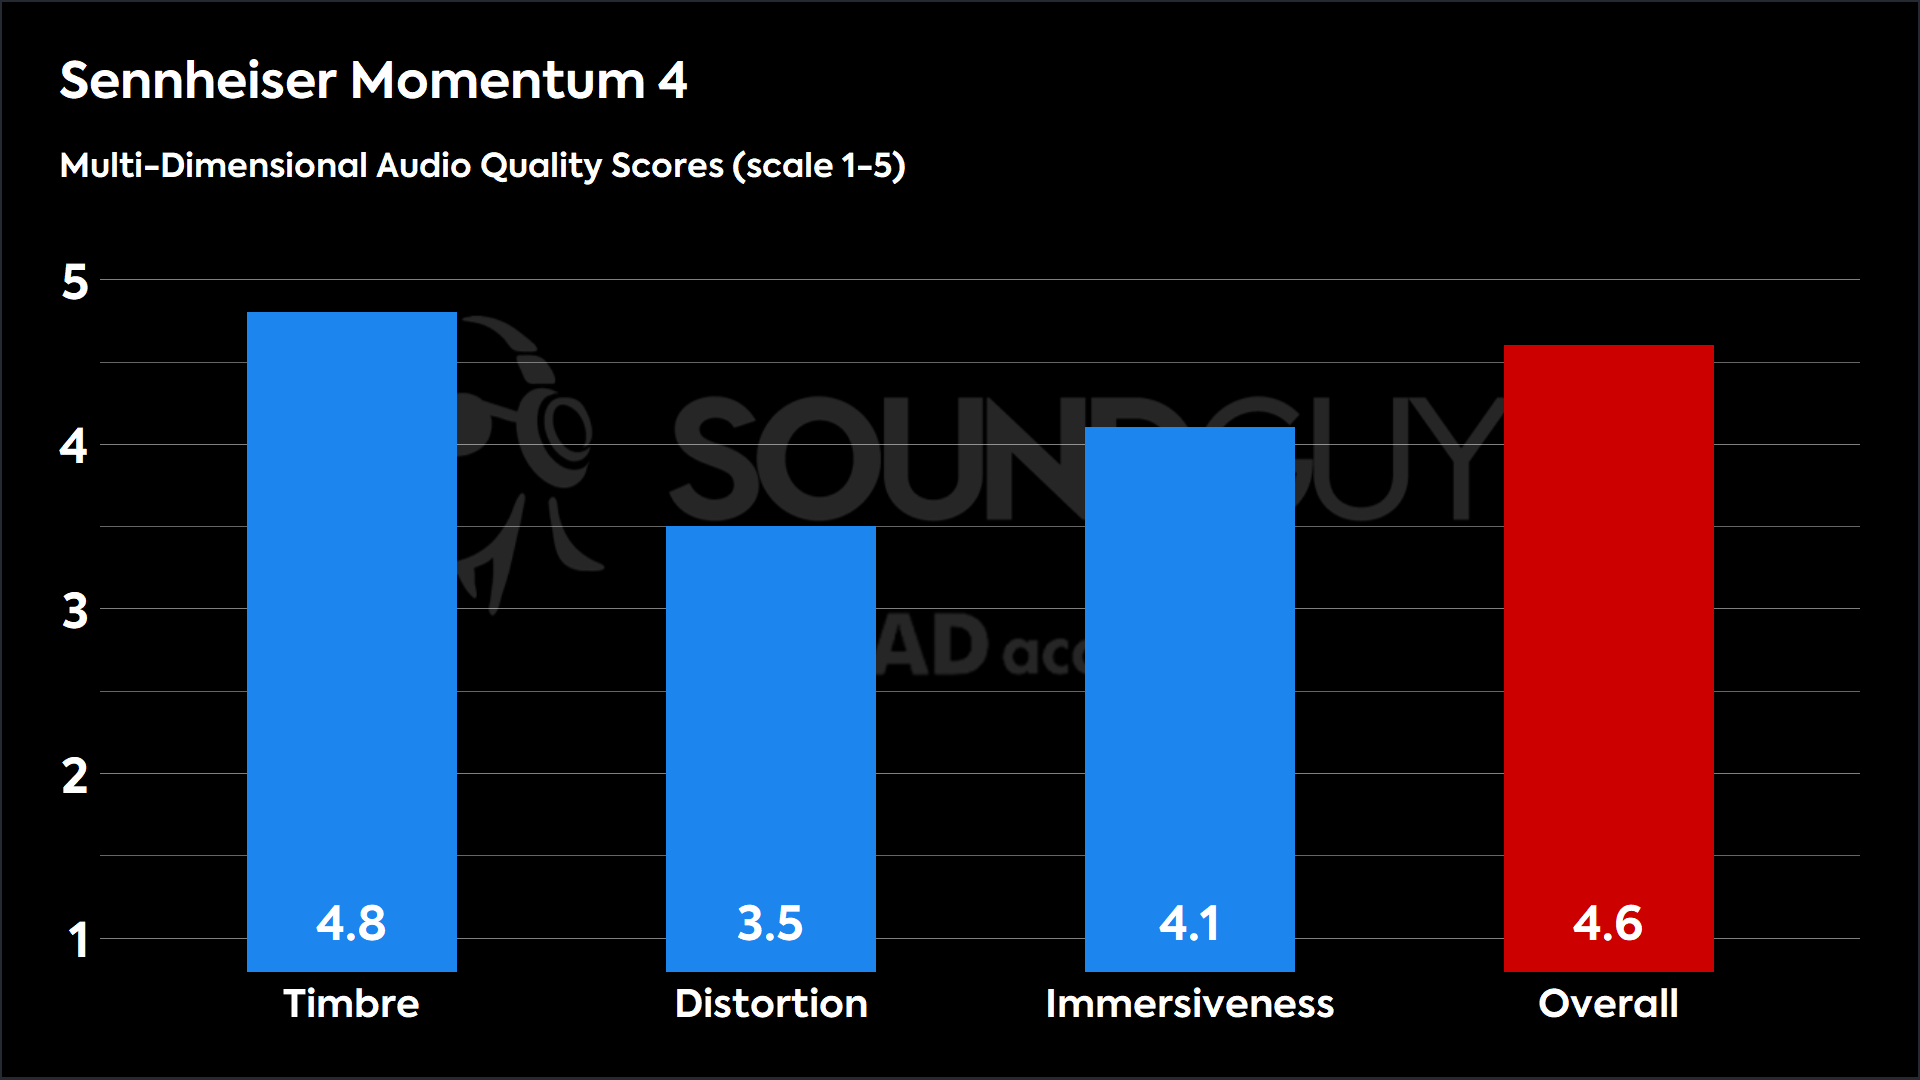 Sennheiser MOMENTUM 4 Wireless review - SoundGuys